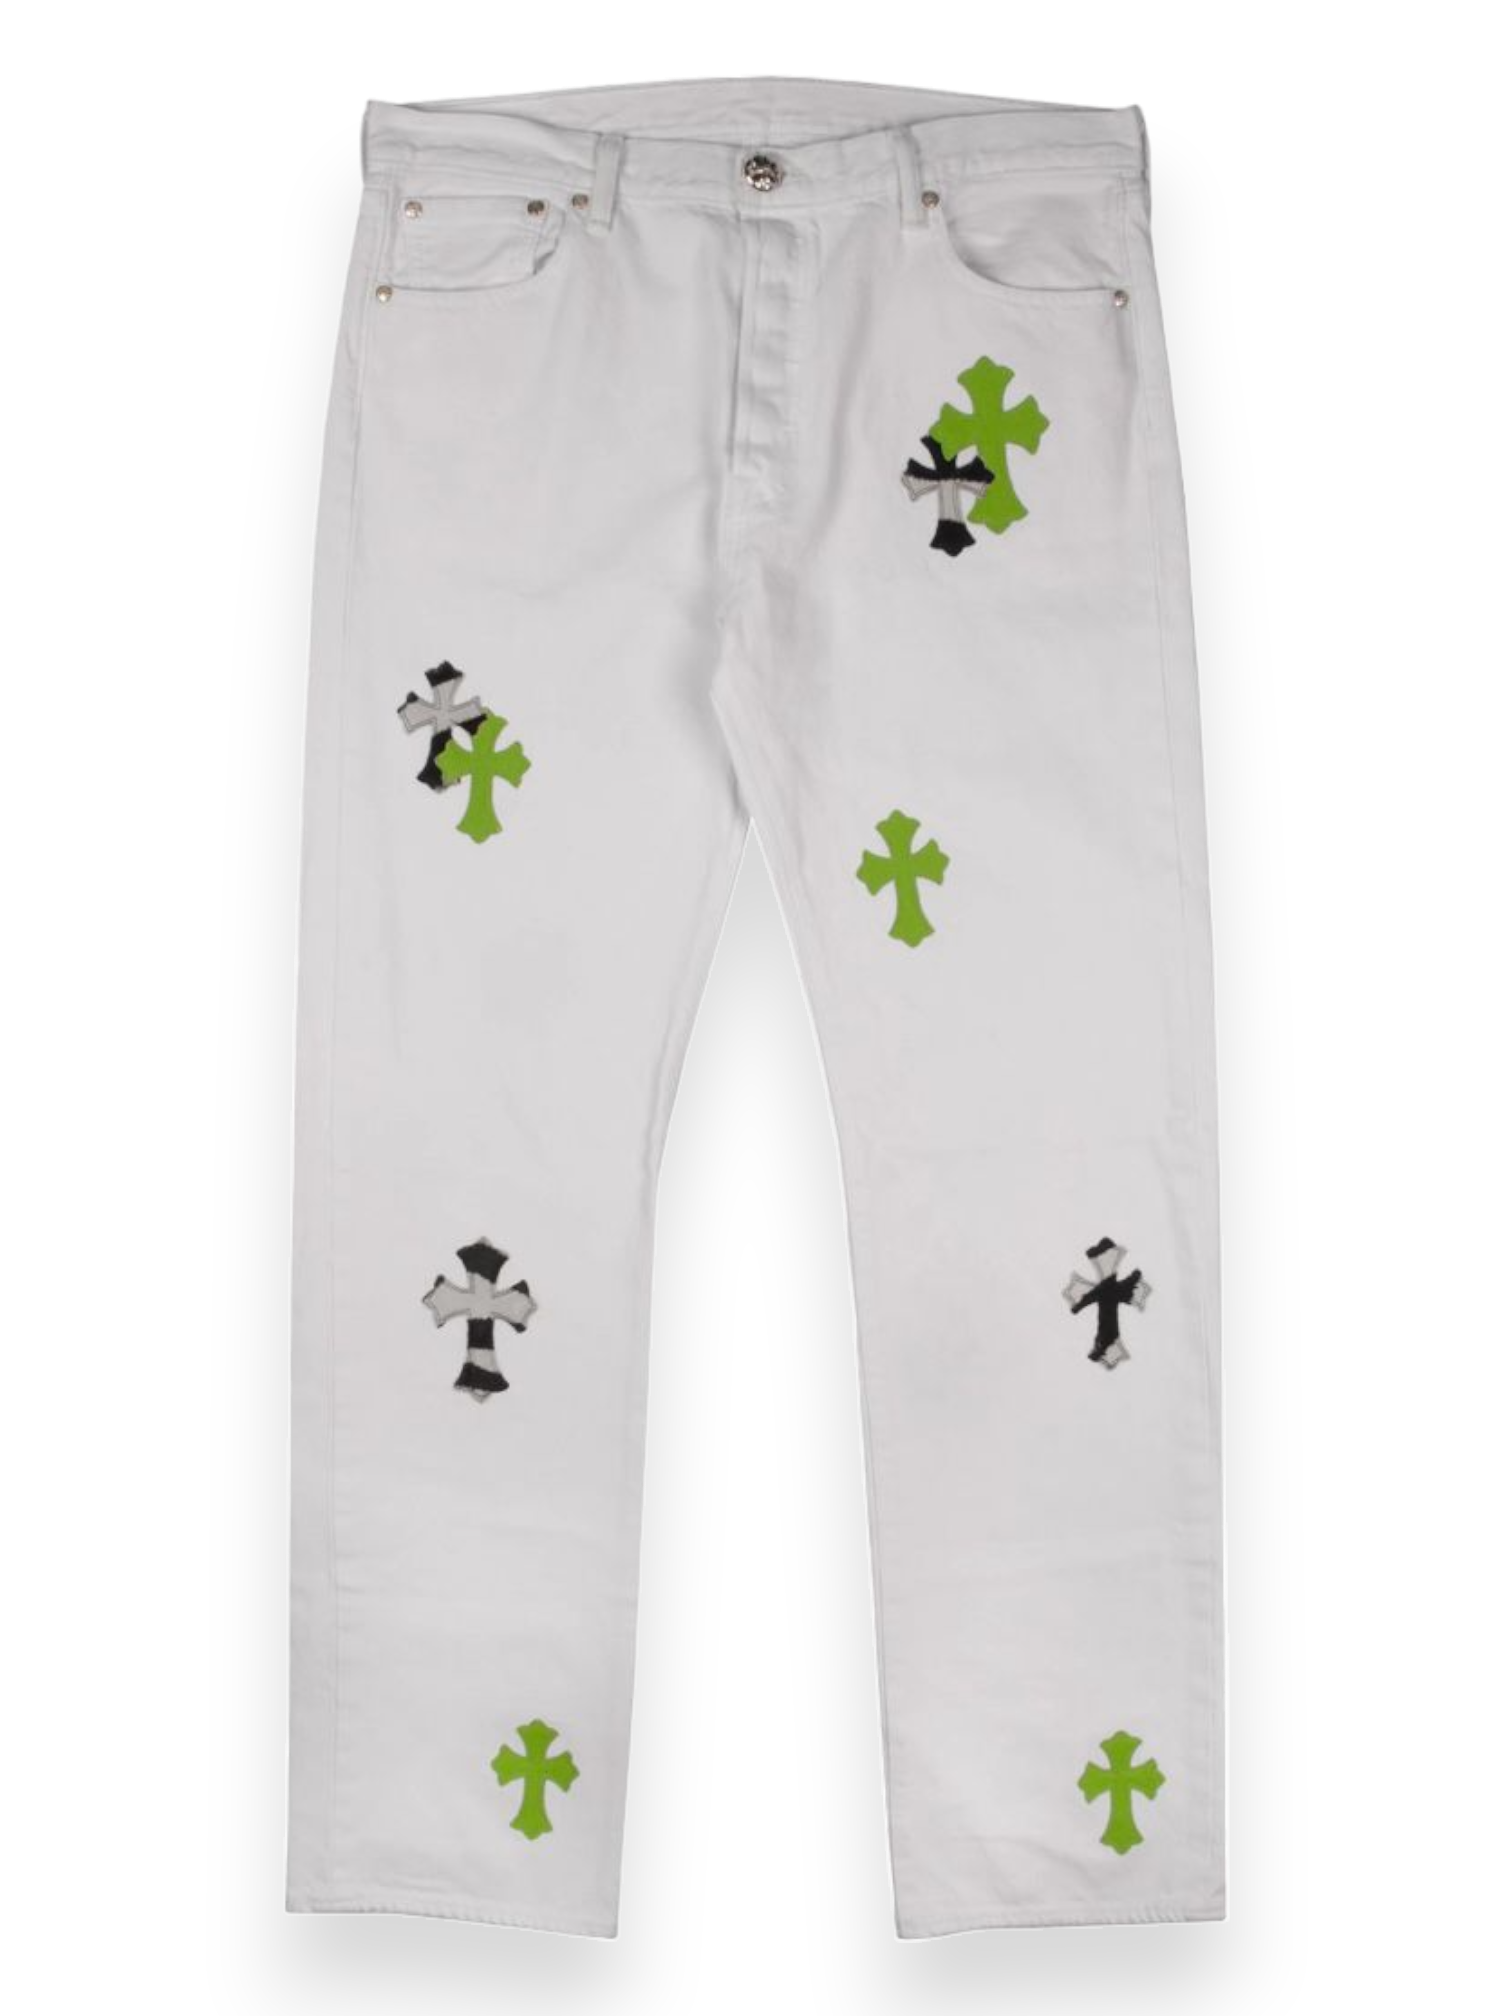 Chrome Hearts Zebra Green Cross Patch White Levi’s Denim Jeans